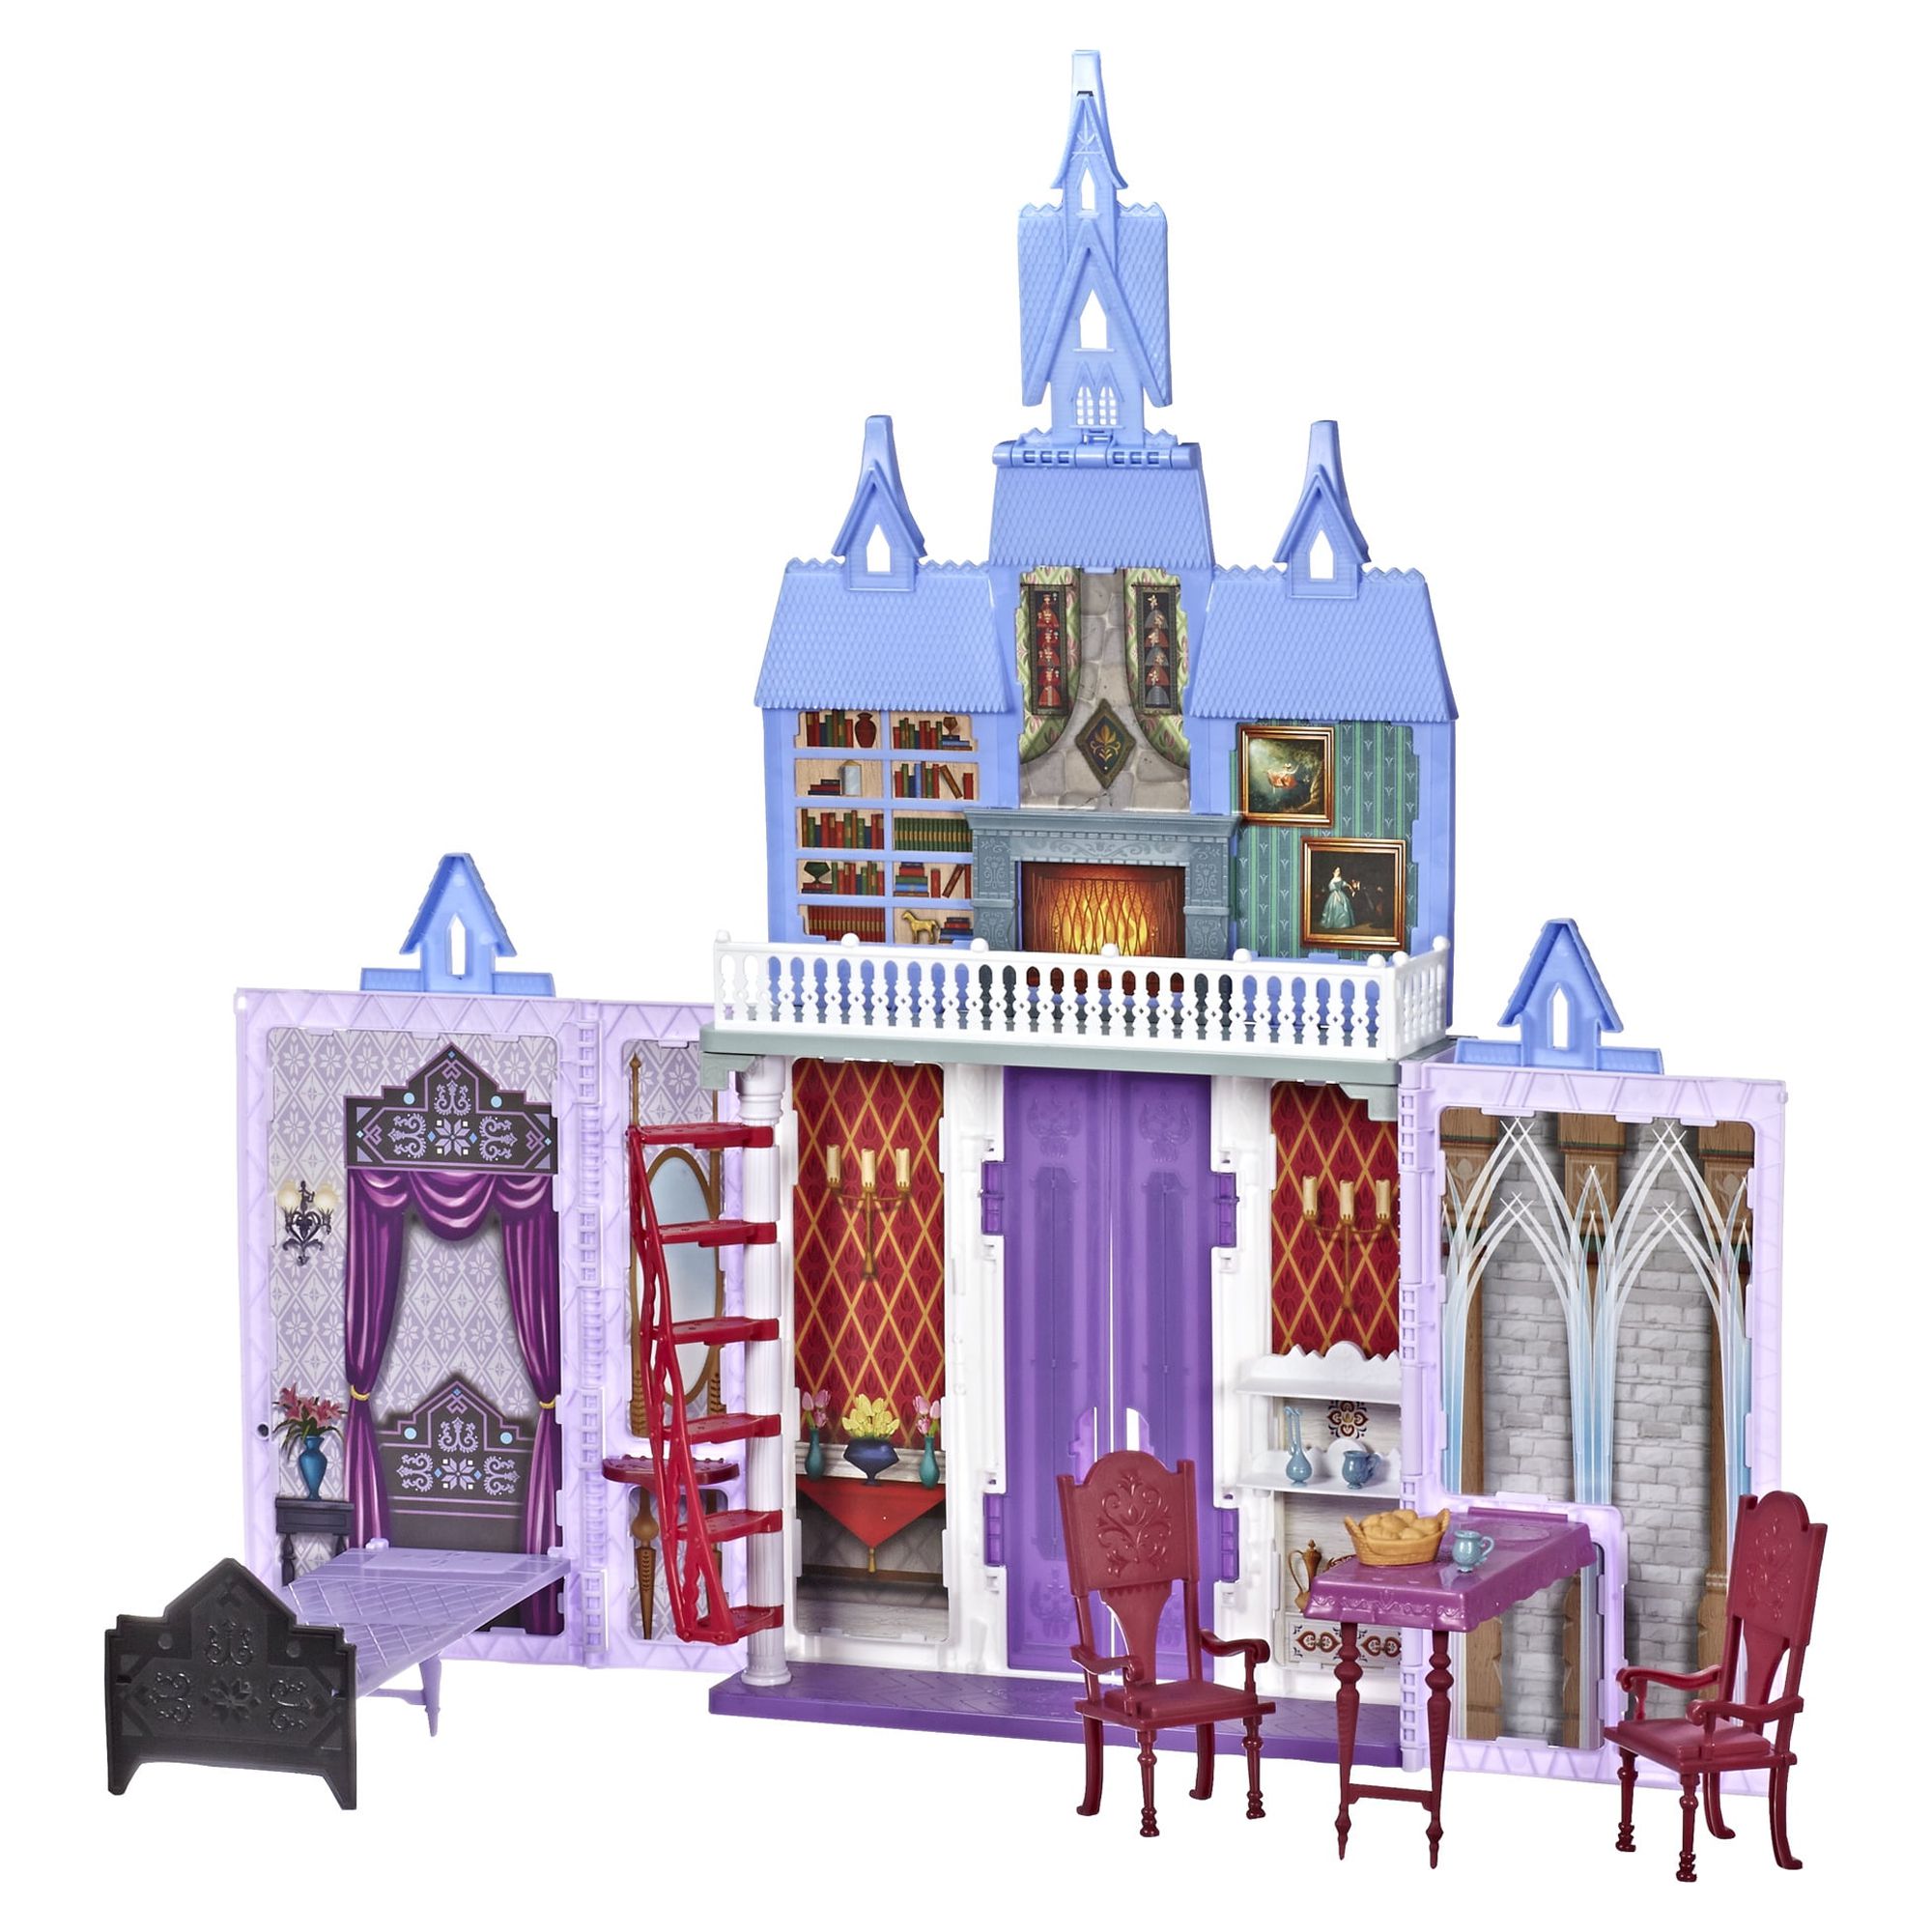 Disney Frozen 2 Portable Arendelle Castle Playset, 6 Accessories and Castle - image 1 of 12